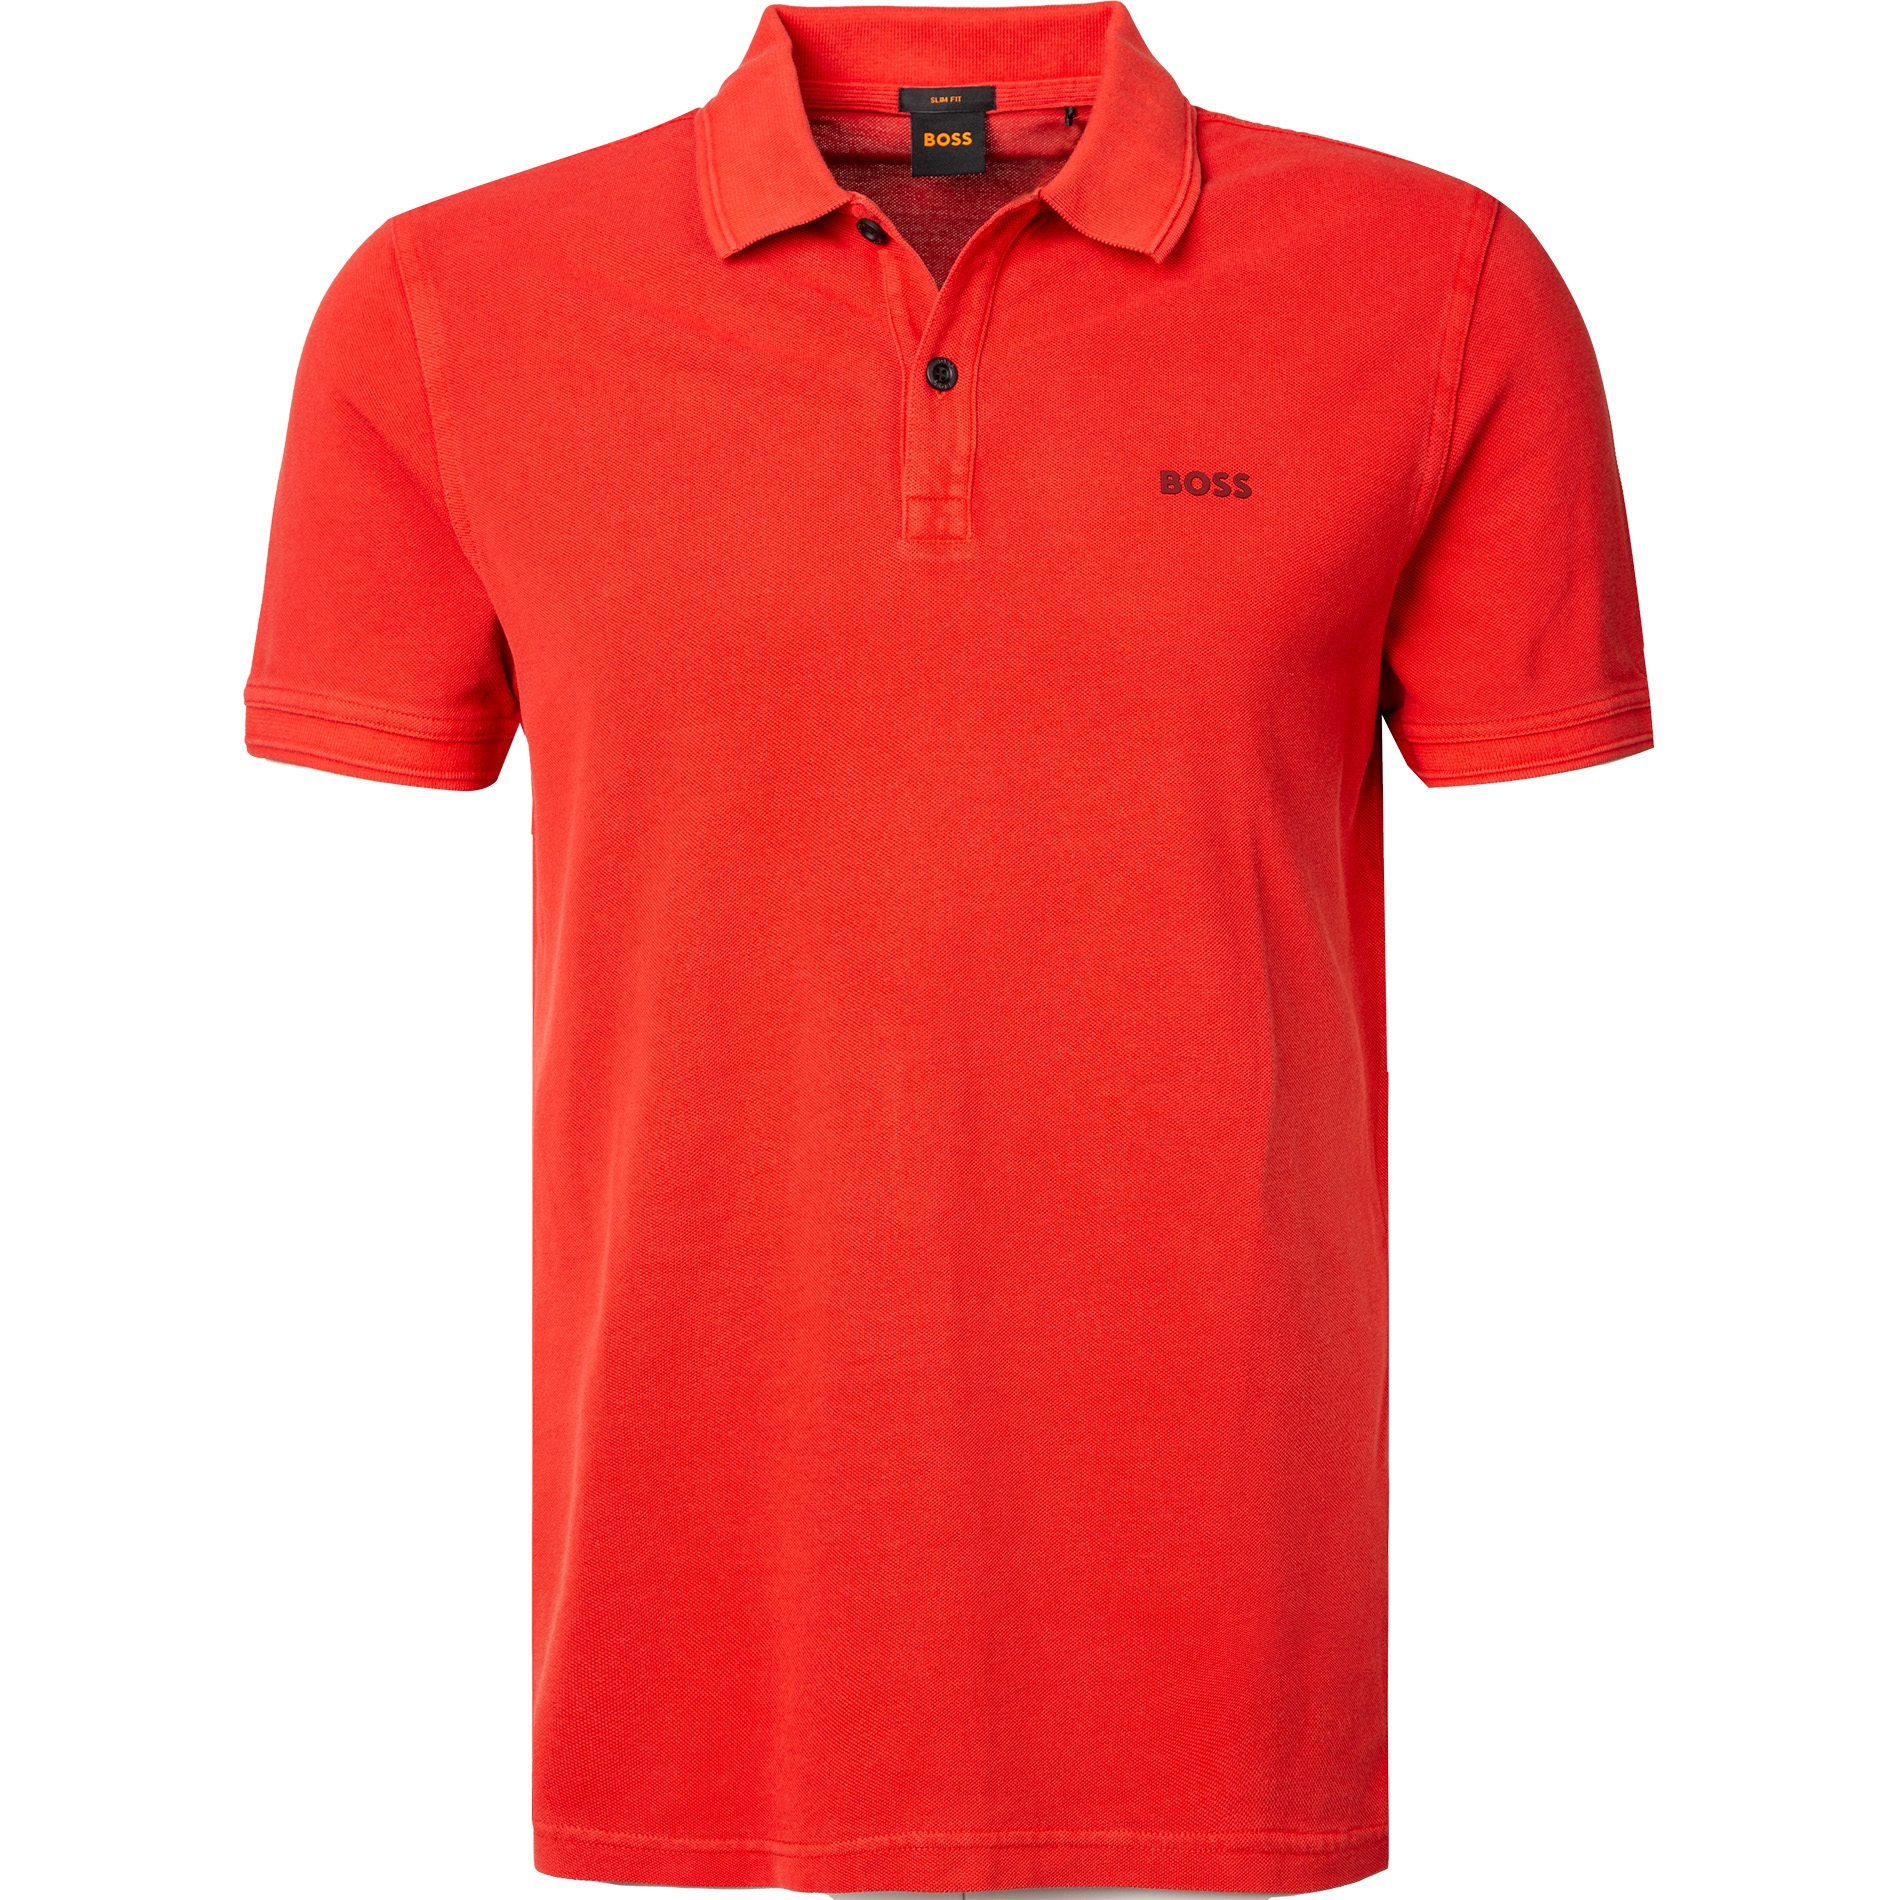 BOSS Orange Herren Polo-Shirt rot Baumwoll-Piqué Slim Fit